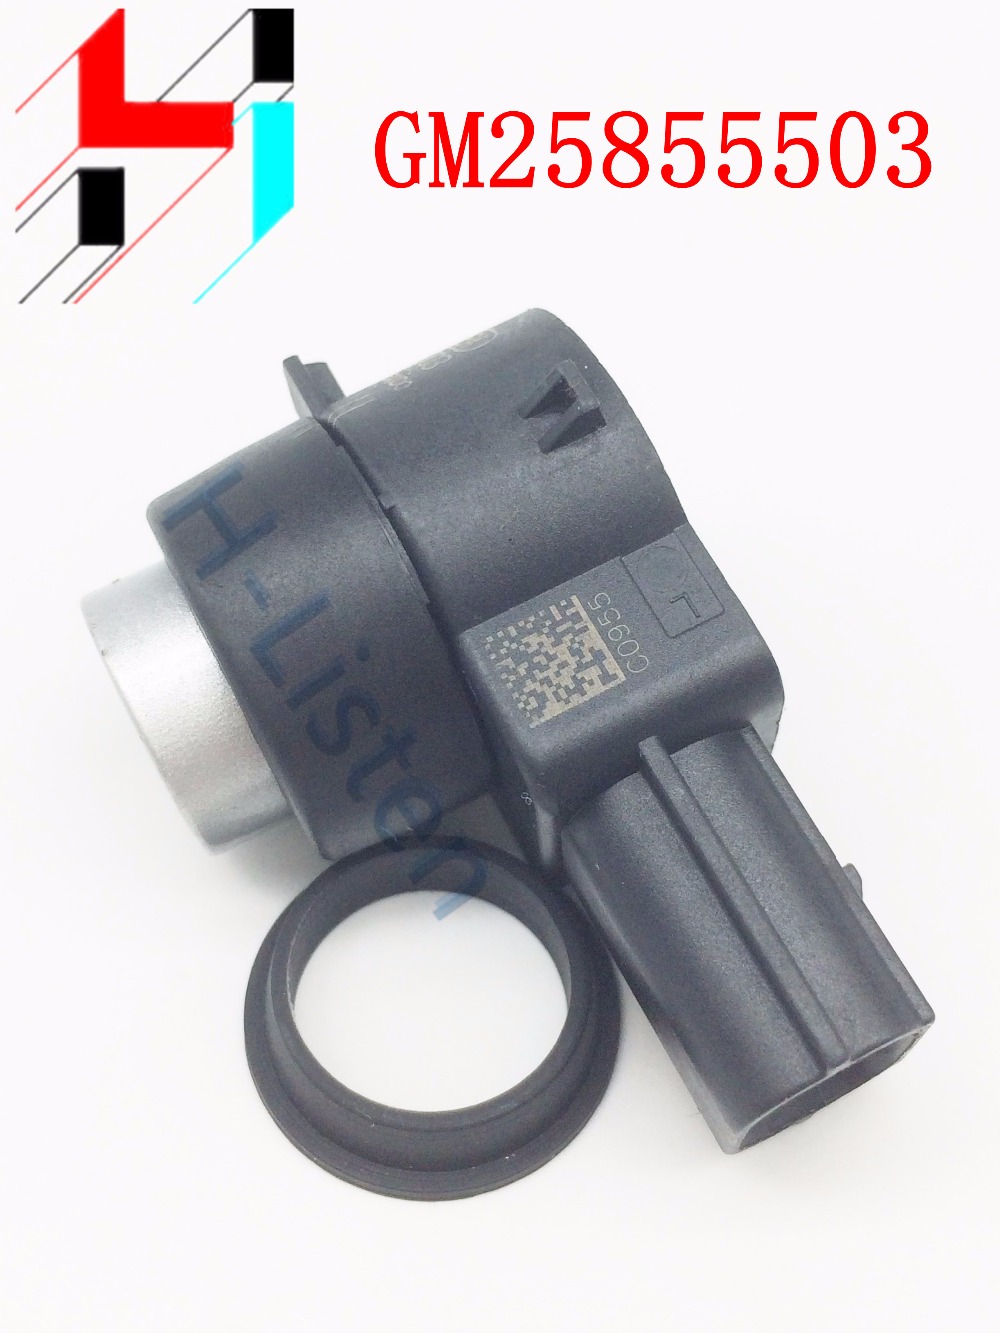 (4 STUKS) 25855503 100% Originele Parking PDC Ultrasone Sensor Reverse Assist voor GM Cruze Opel Cadillac OE #0263003704